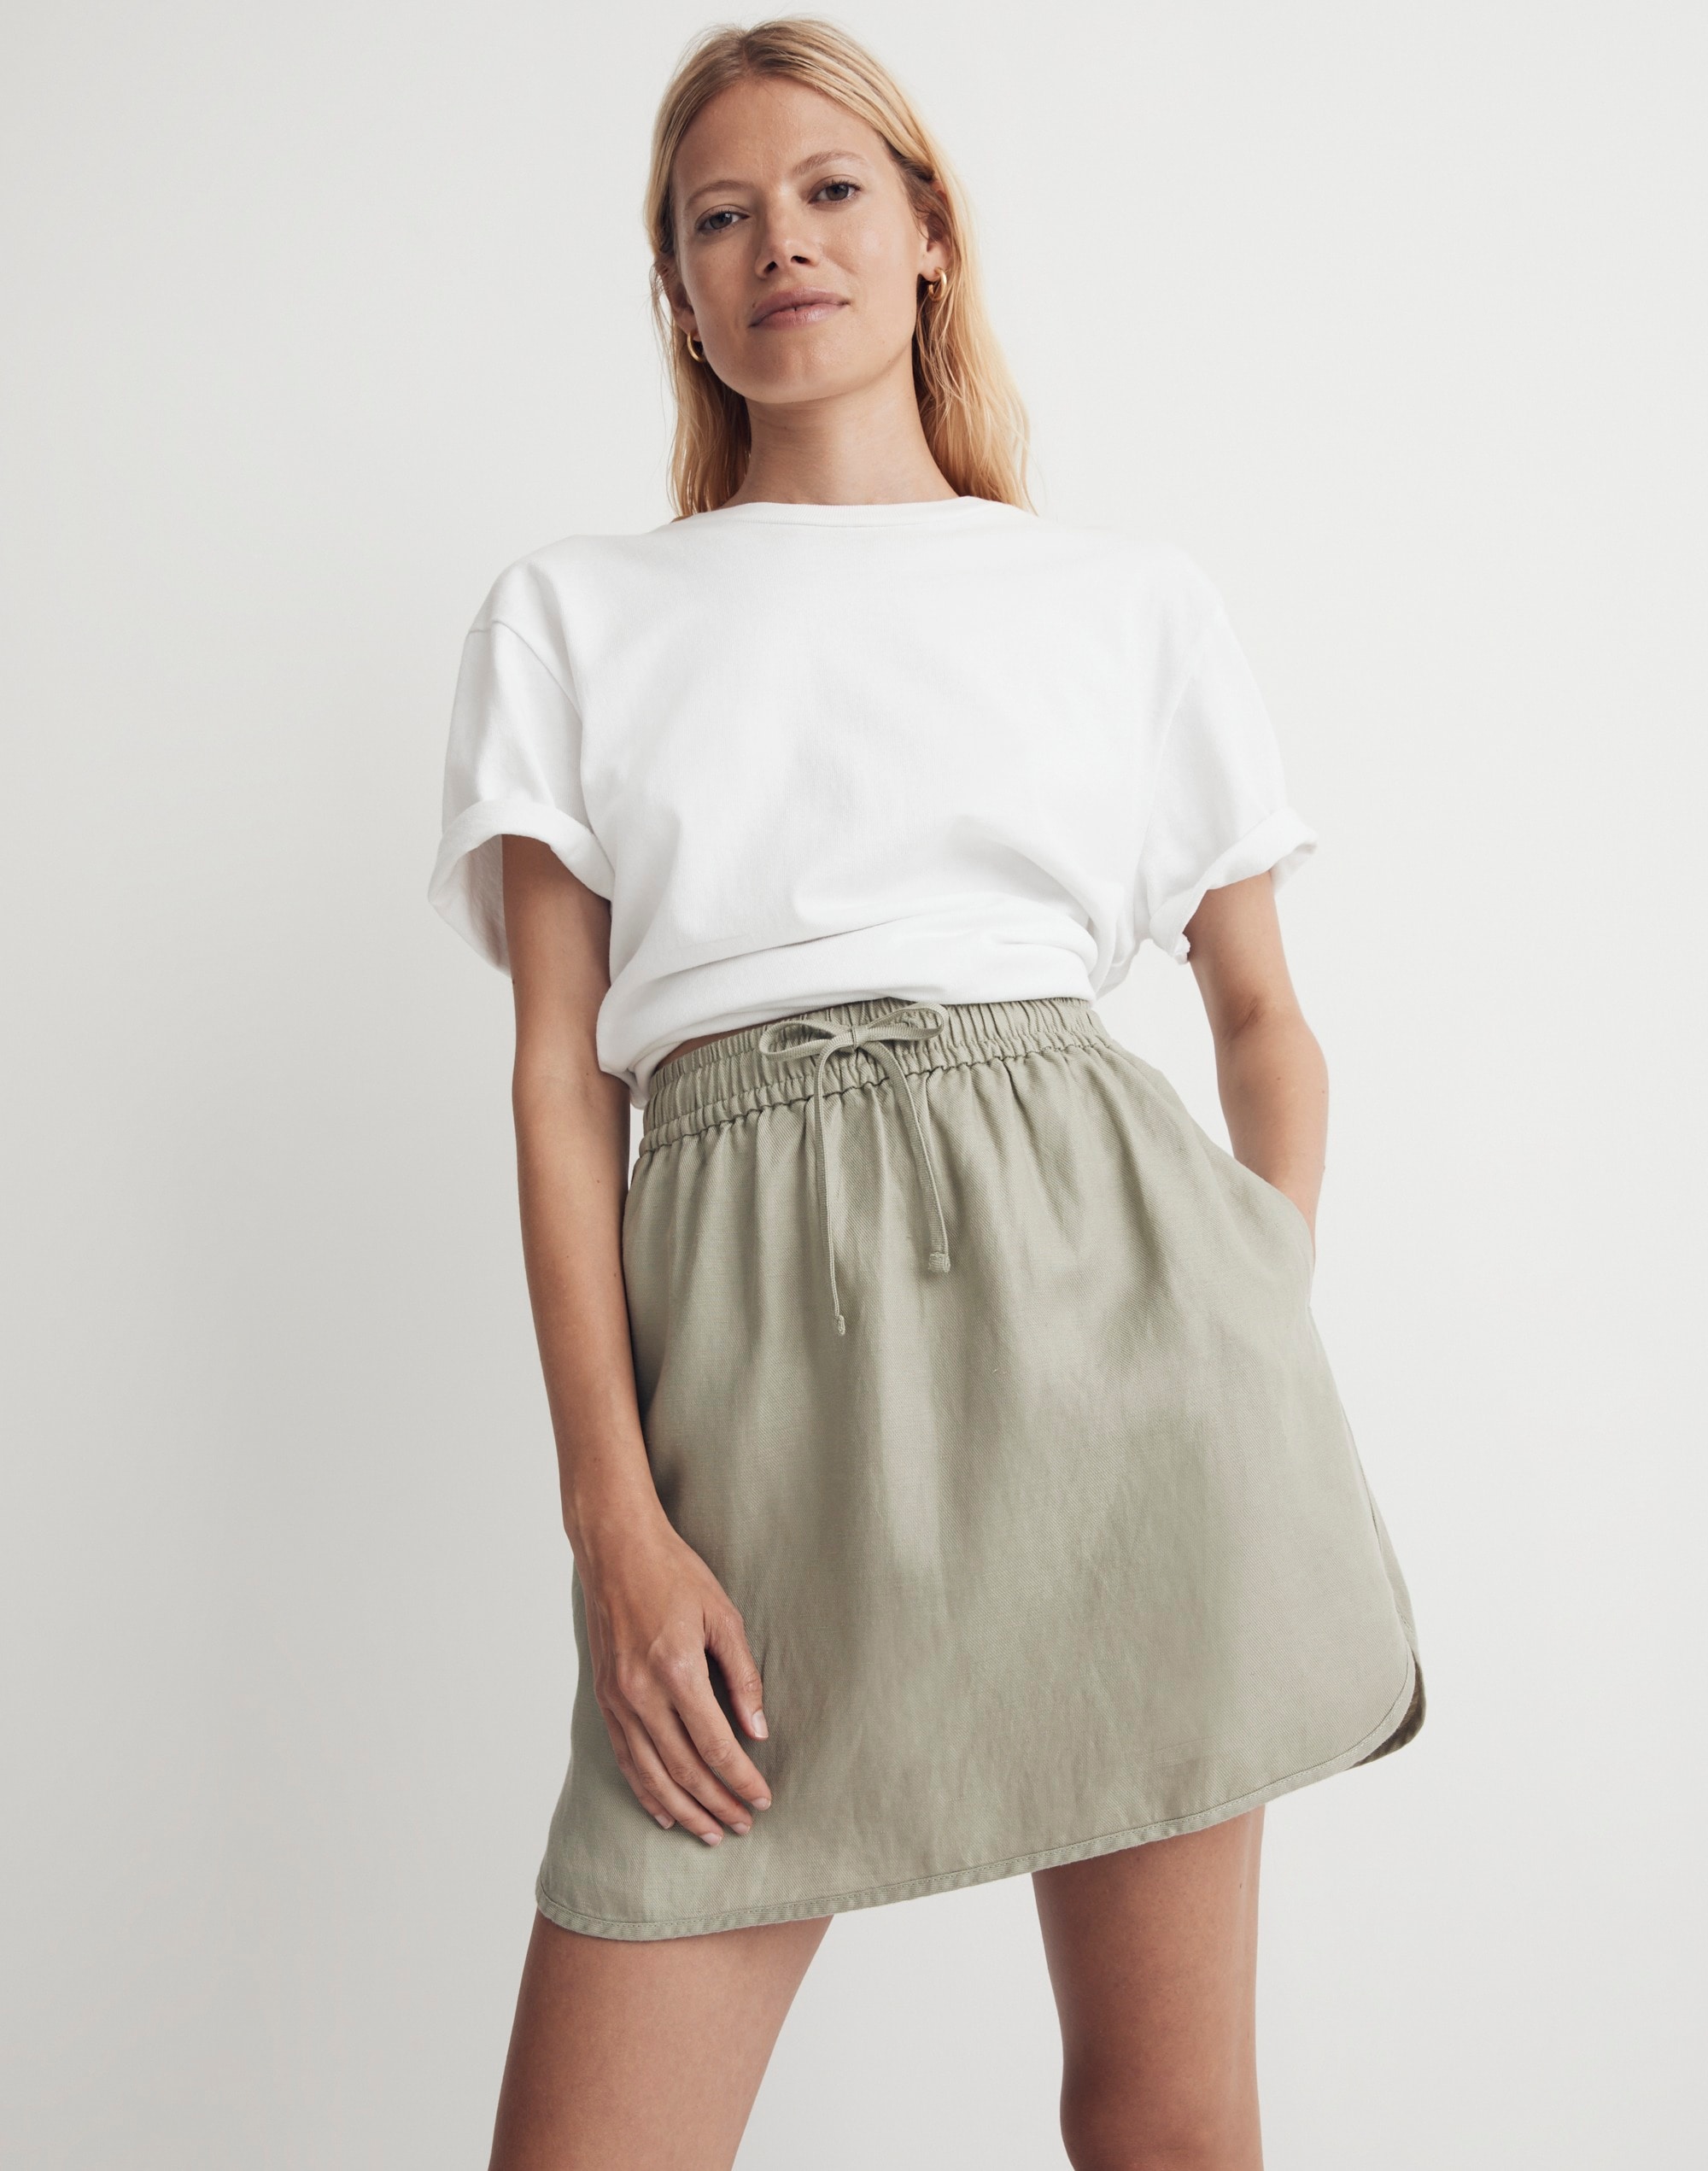 The Madi Front-Slit Denim Skirt by Pilcro